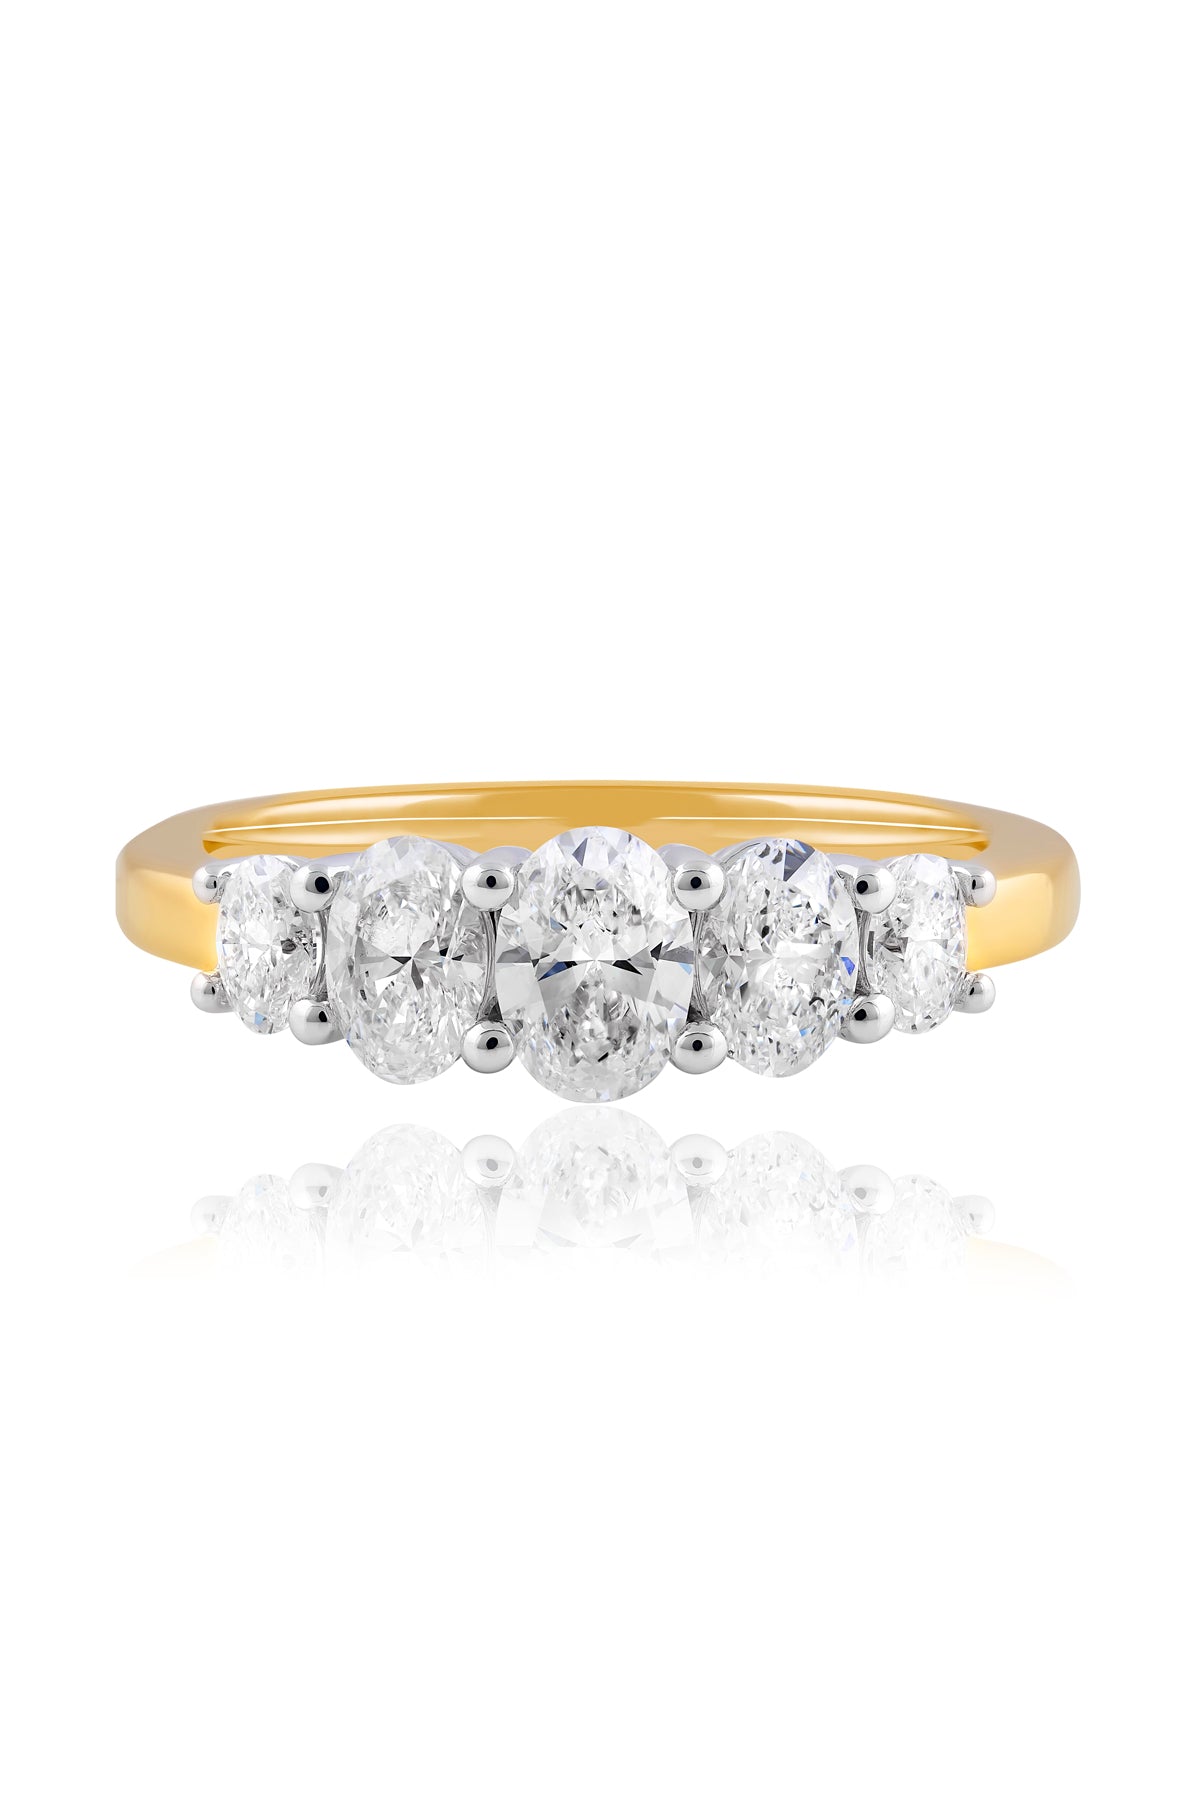 1.32 Carat Diamond Anniversary Ring from LeGassick Jewellery.